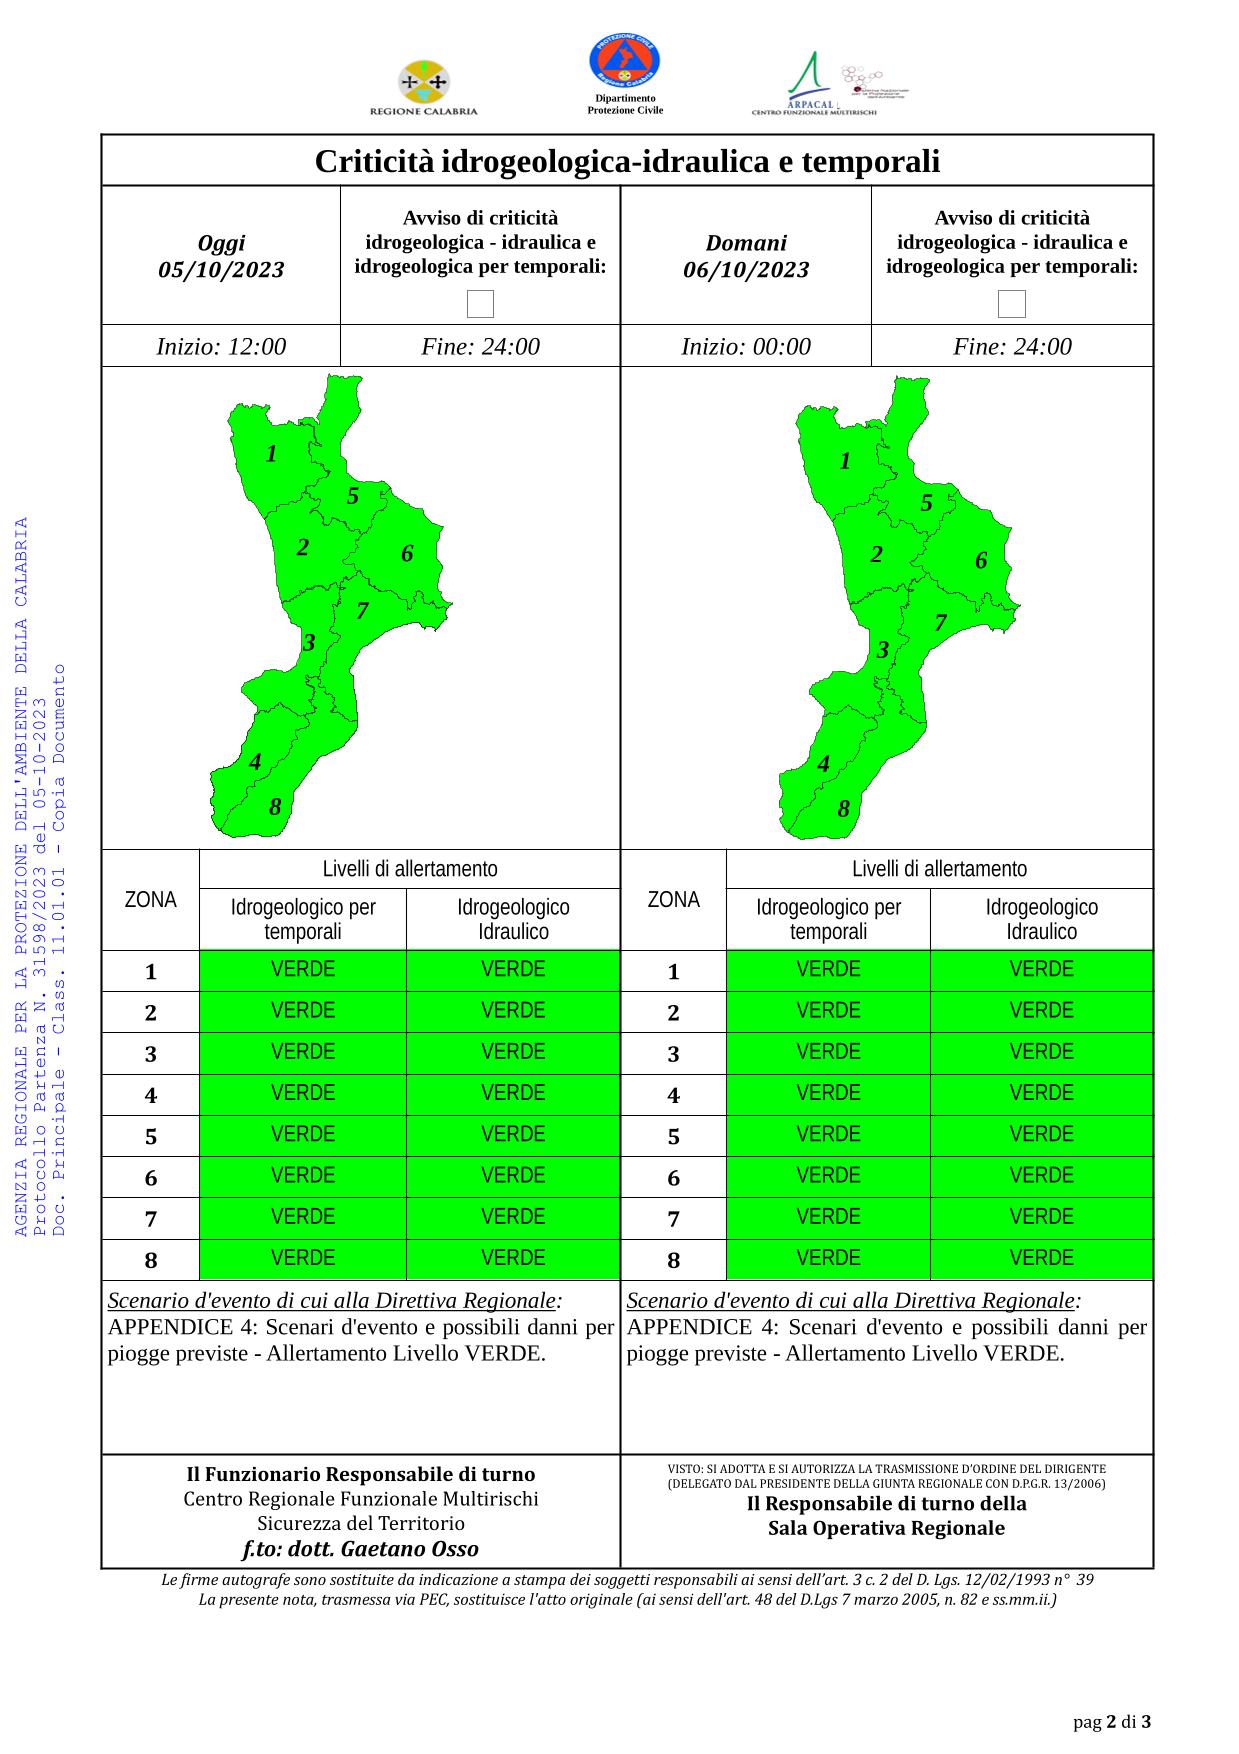 Criticità idrogeologica-idraulica e temporali in Calabria 05-10-2023